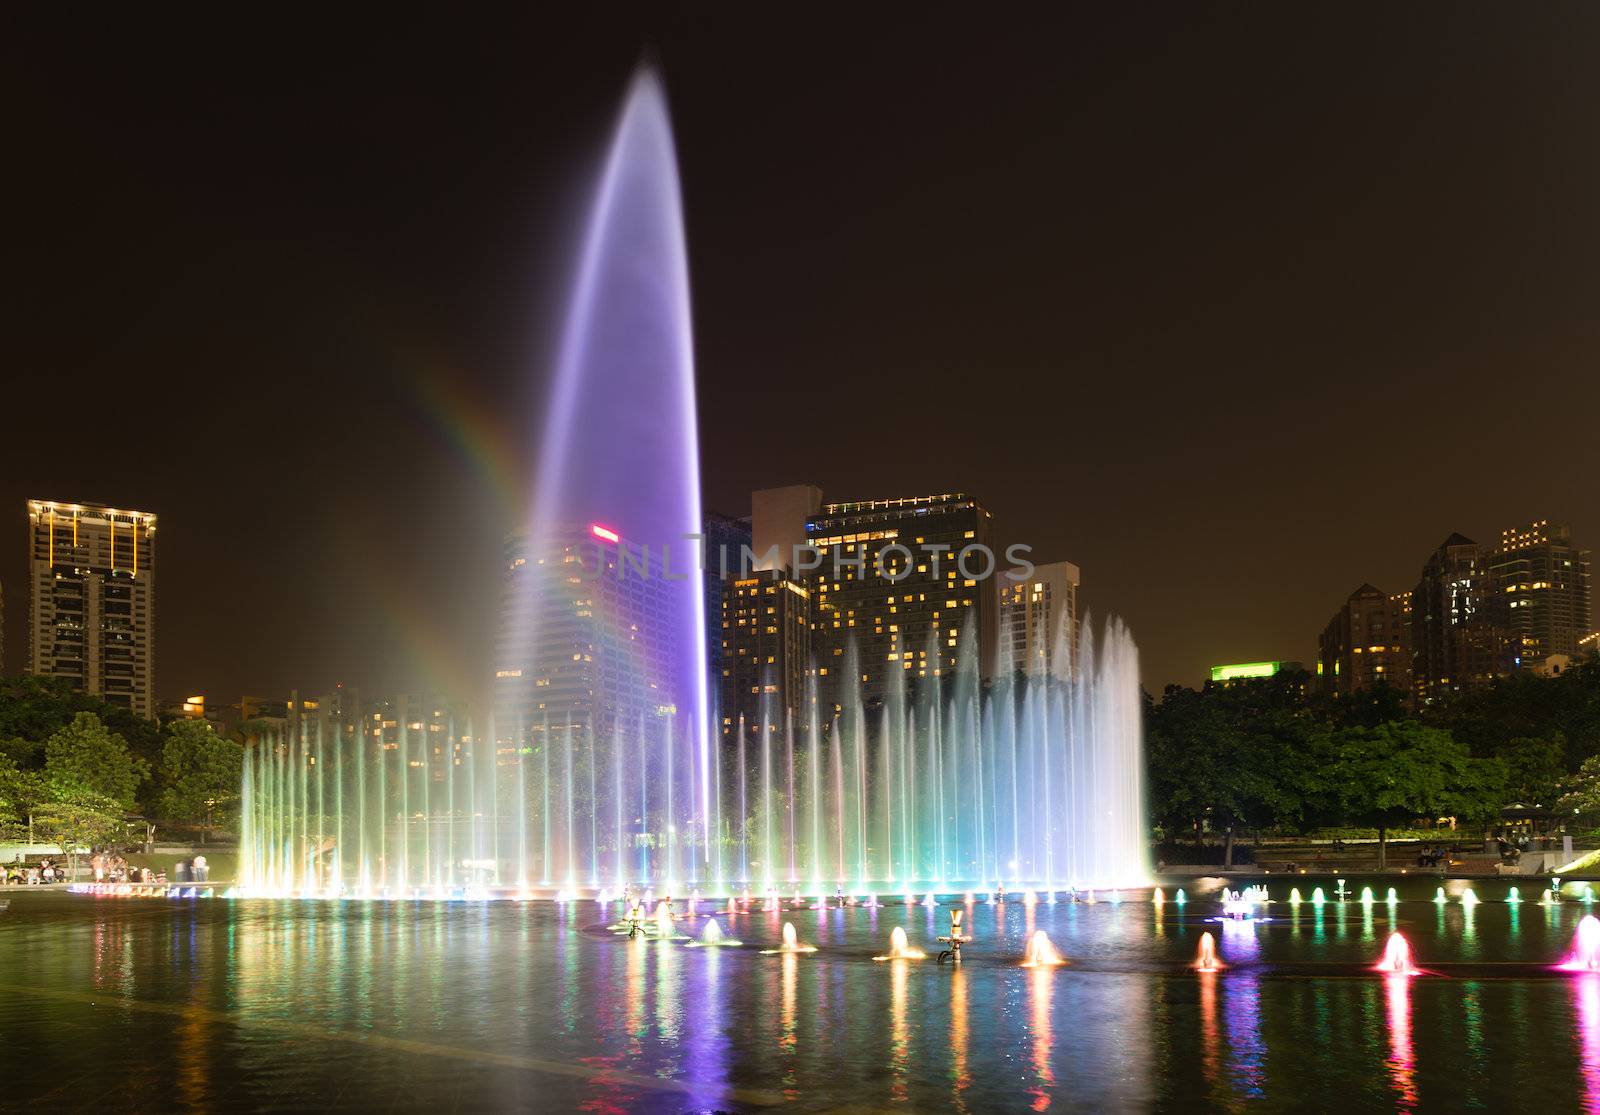 Illuminated fountain at night in modern city by iryna_rasko